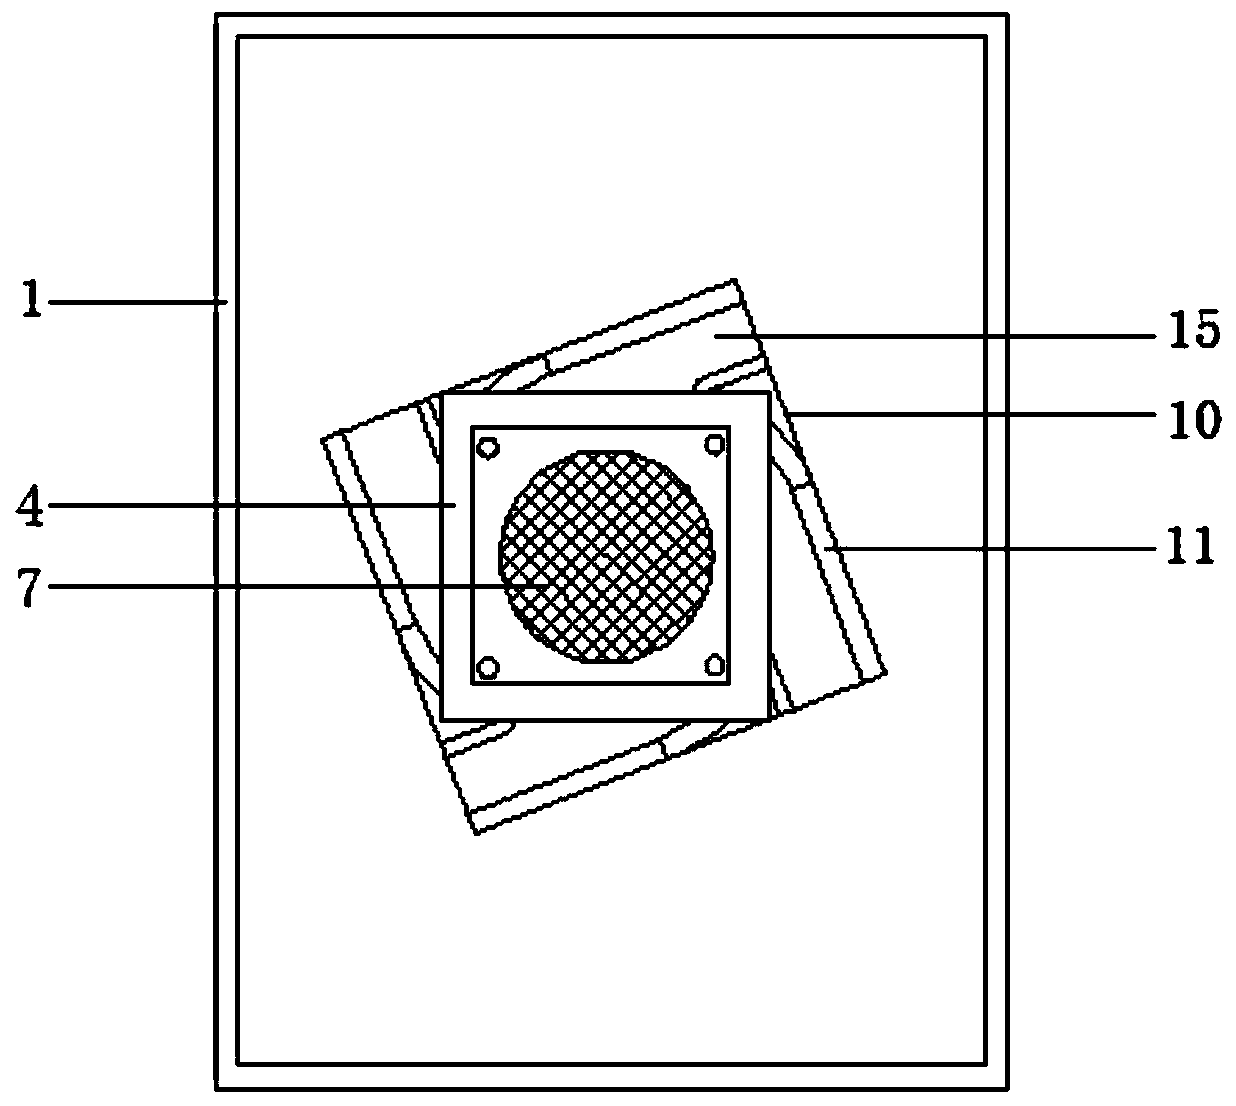 FFU four-air-duct box structure